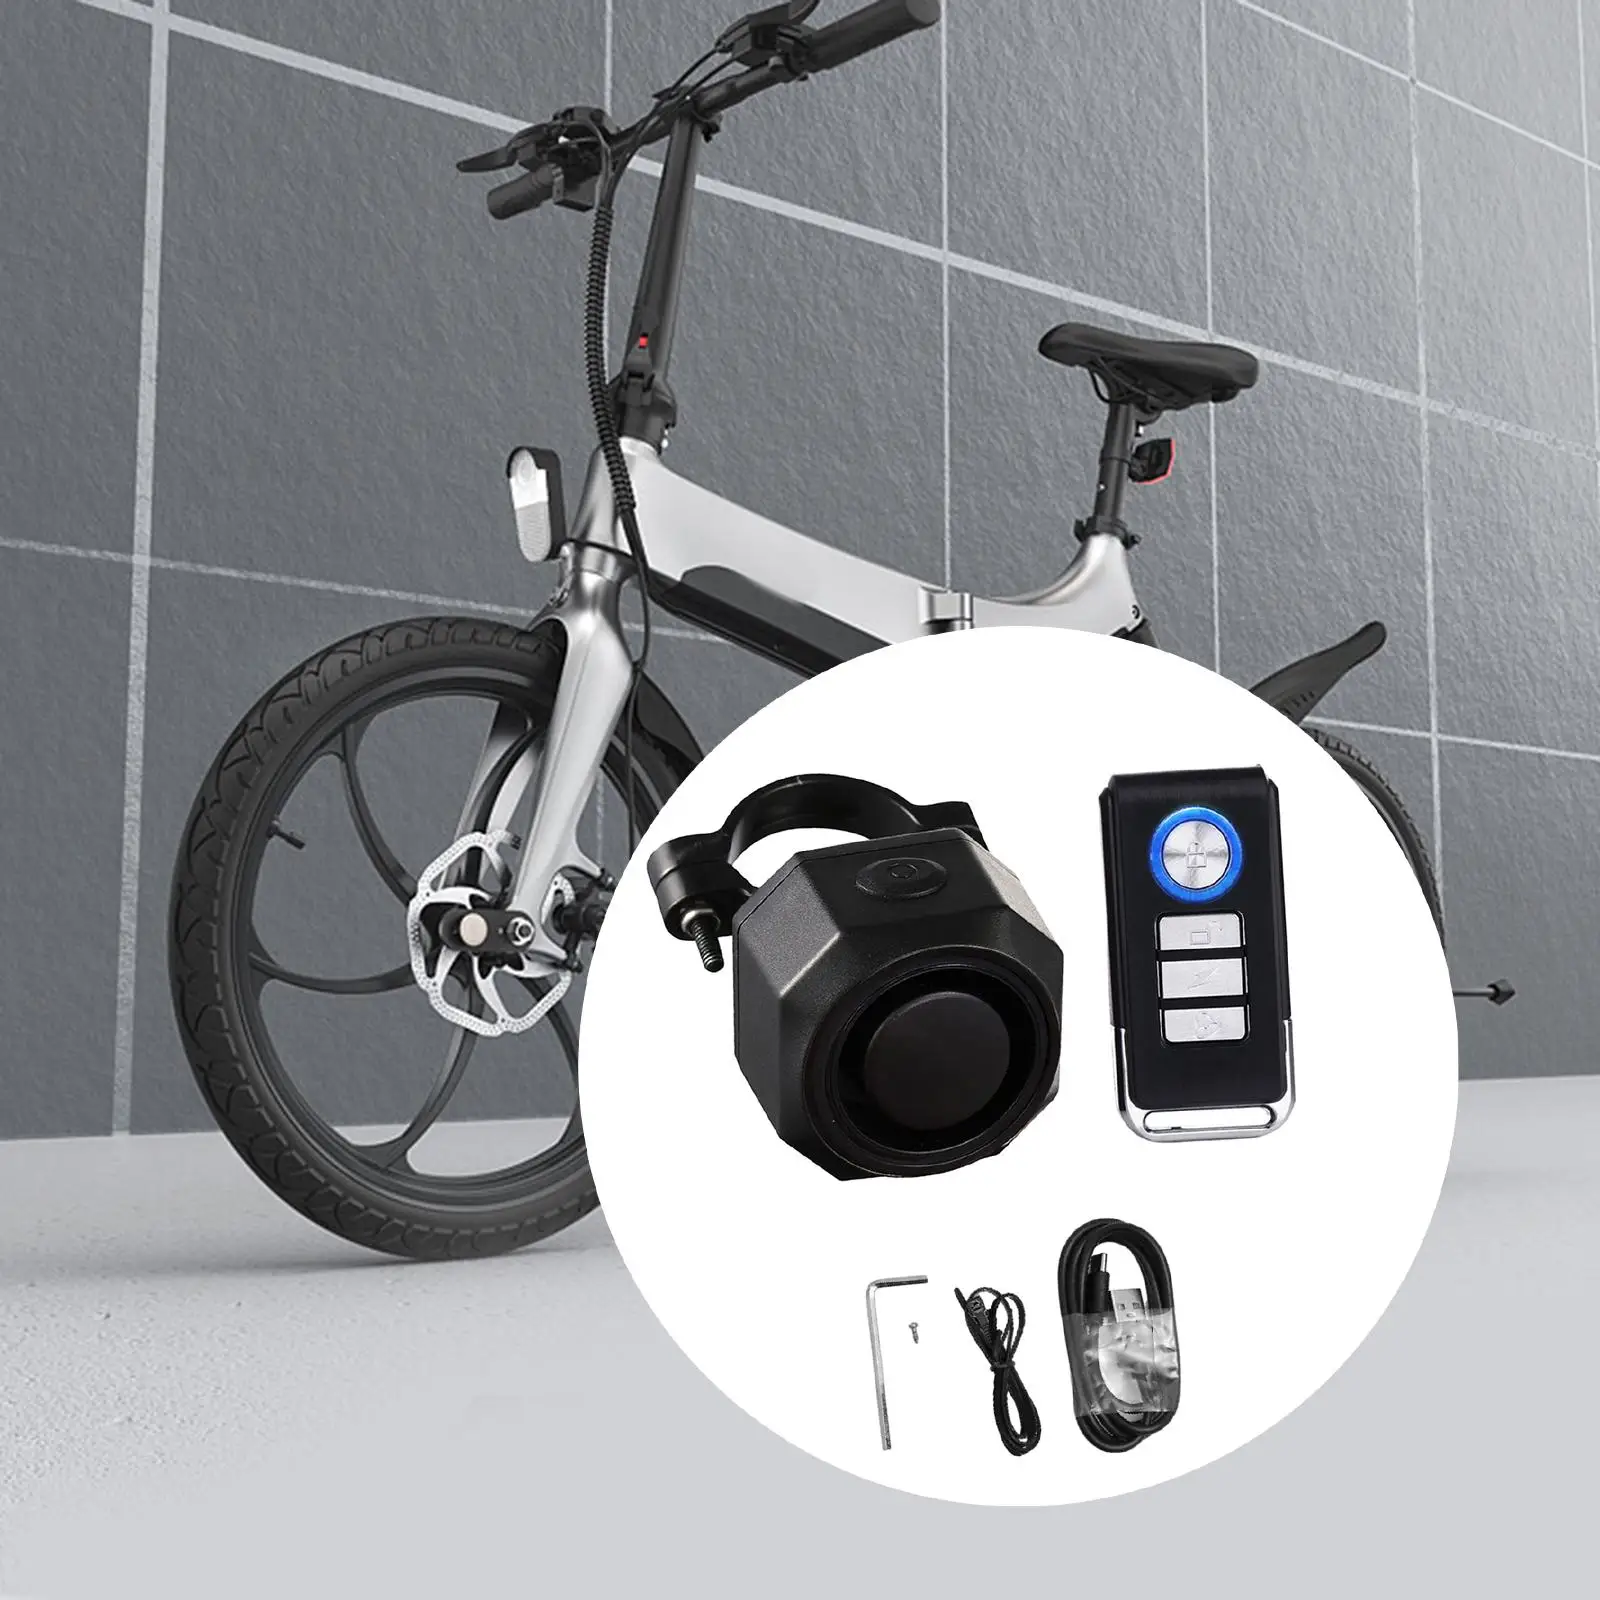 Bike Alarm Bike Vehicle Tracker, Loud 110dB, Vibration Security Alarm, Vibration Alarm for Equipment Trailer